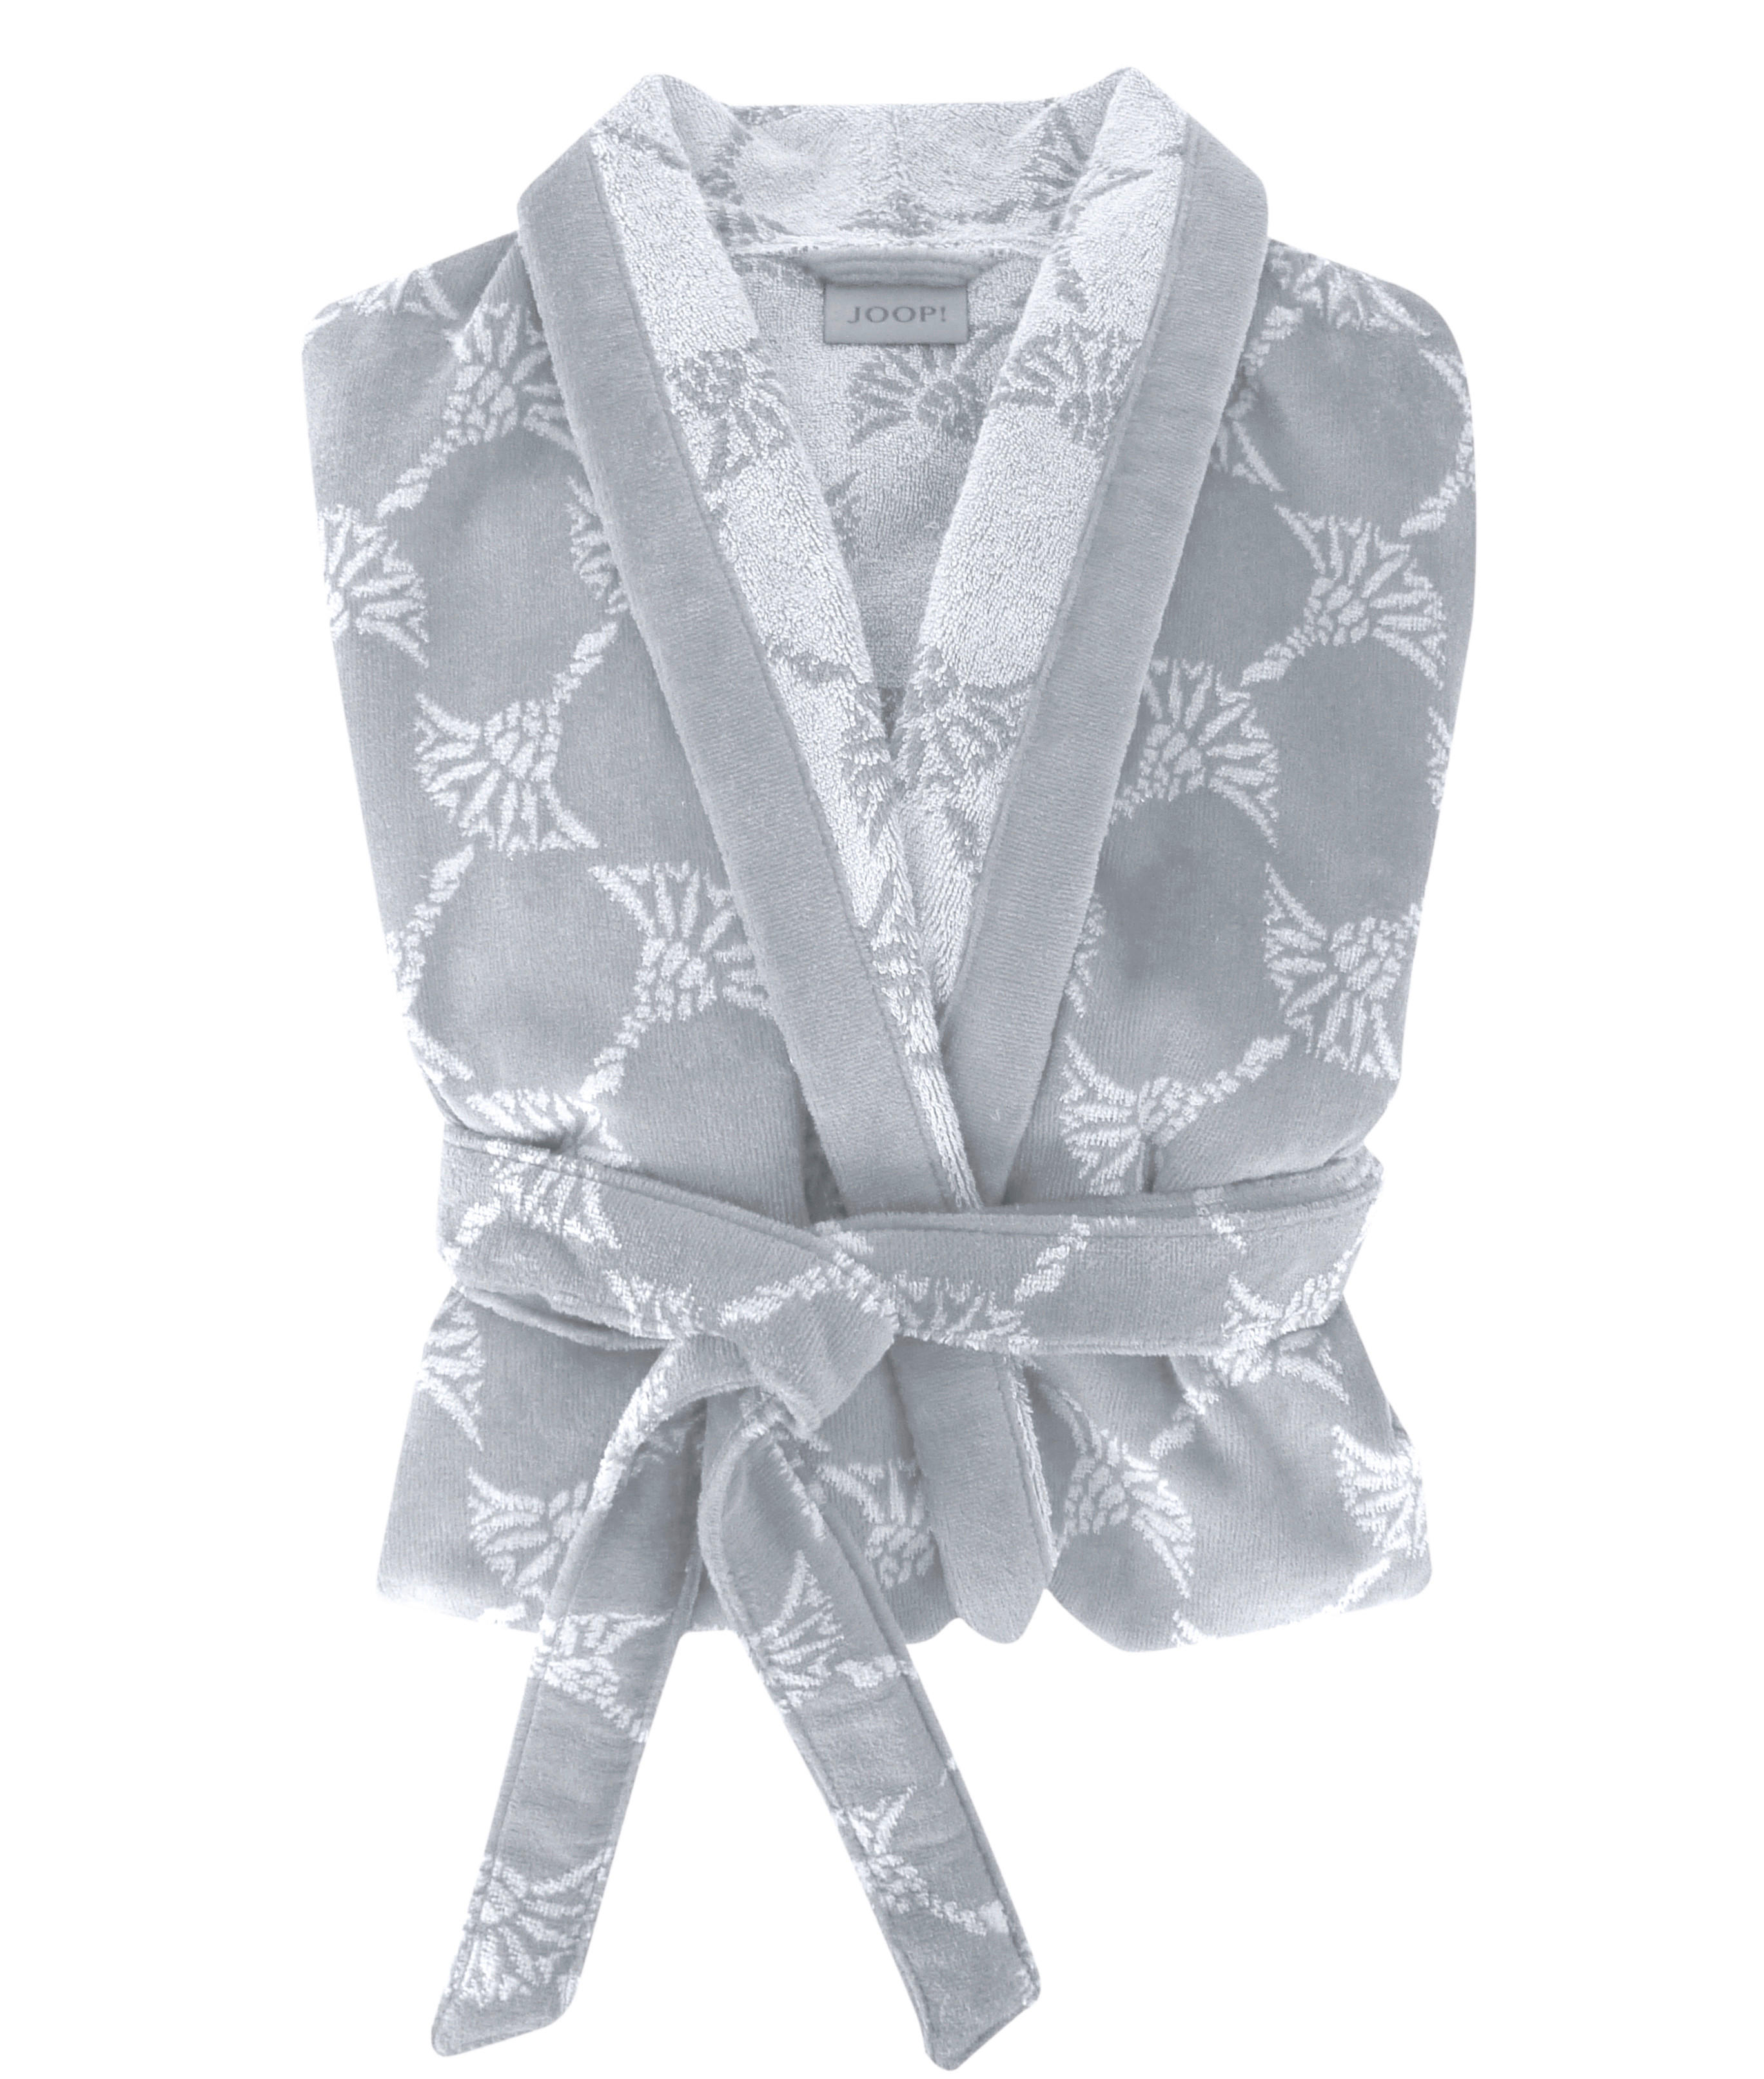 BADEMANTEL Silber  - Silberfarben/Weiß, Basics, Textil (120 cmcm) - Joop!